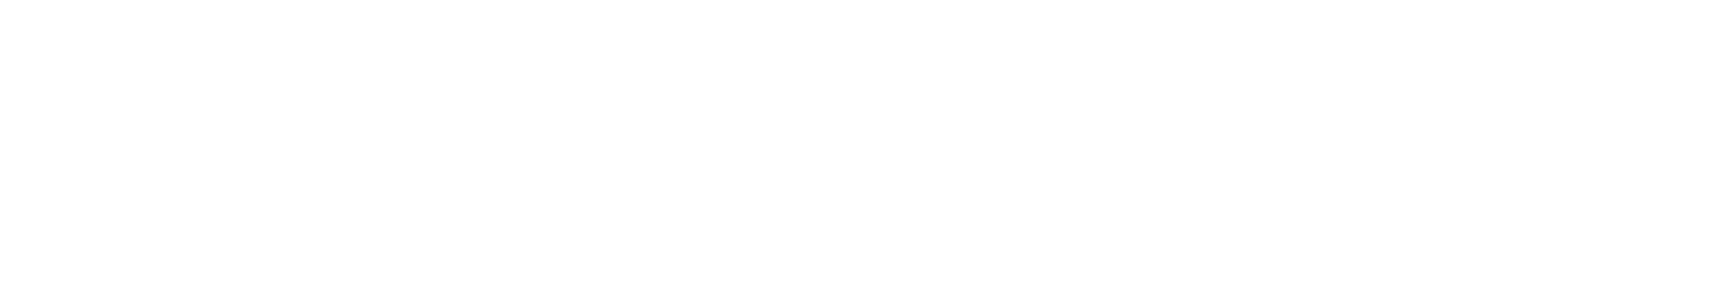 powernavi ecosystems of trust logo